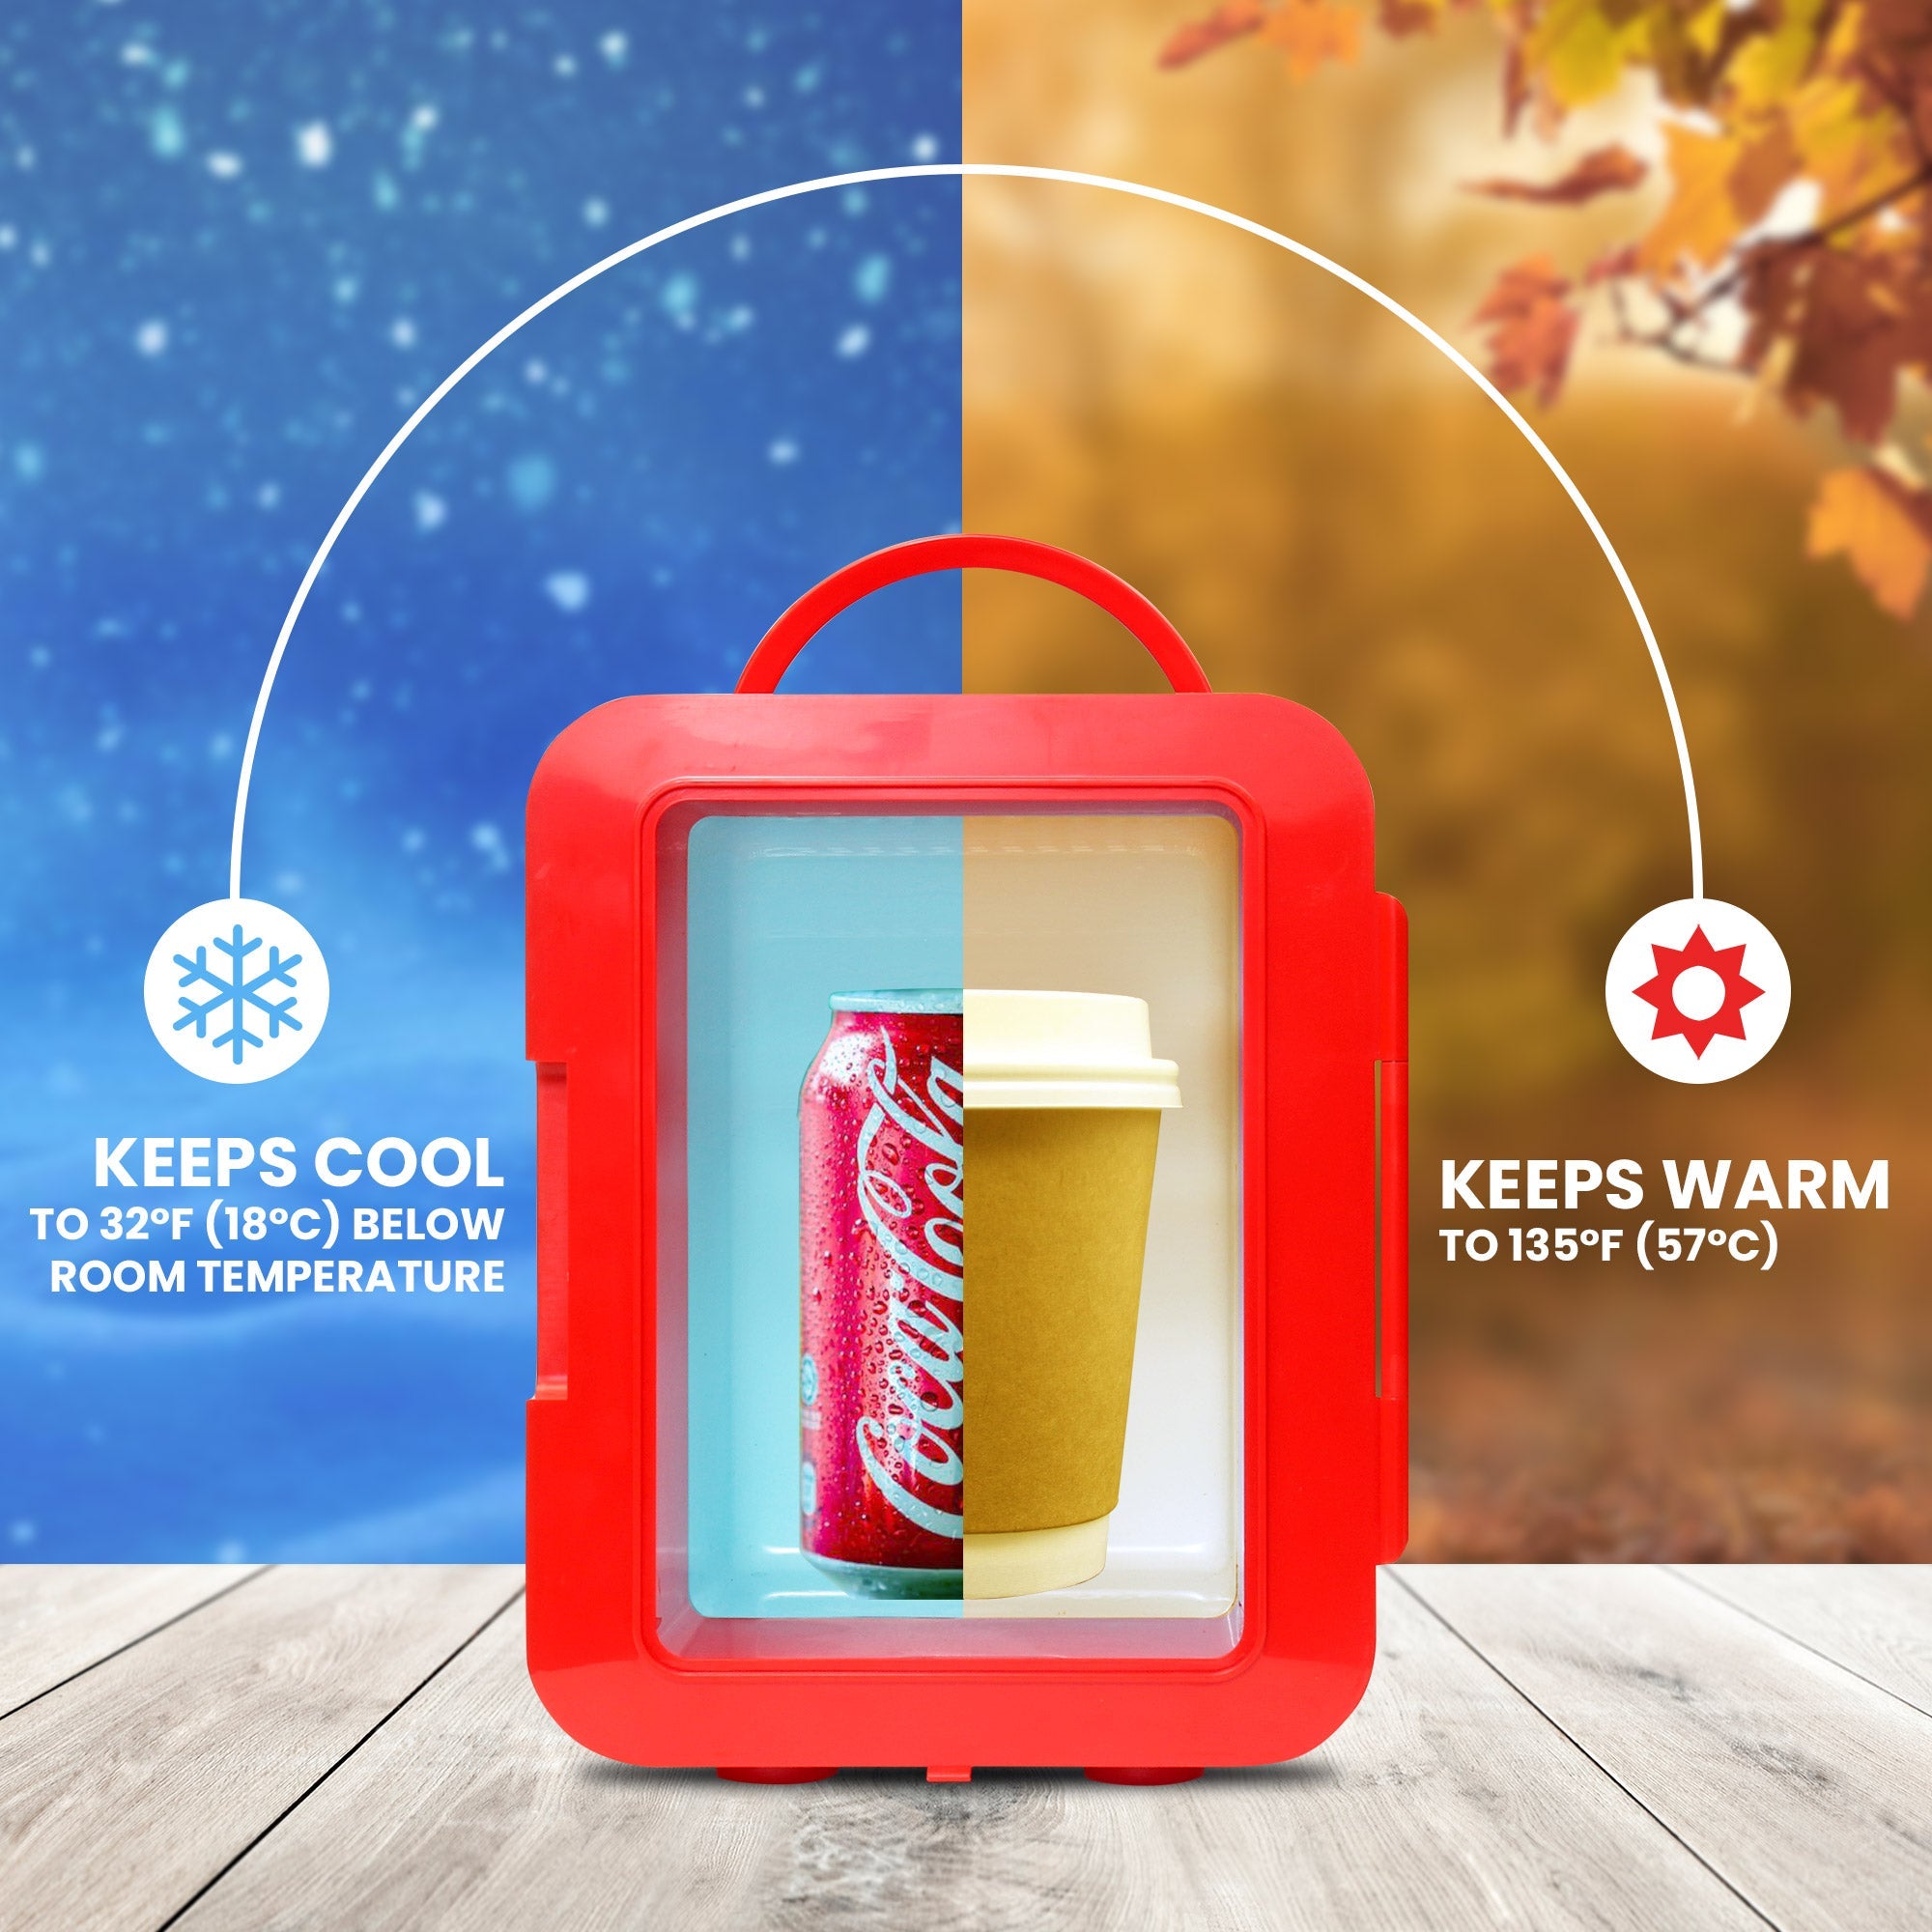 coca-cola-mini-fridge-love-1971-series-cooler-and-warmer